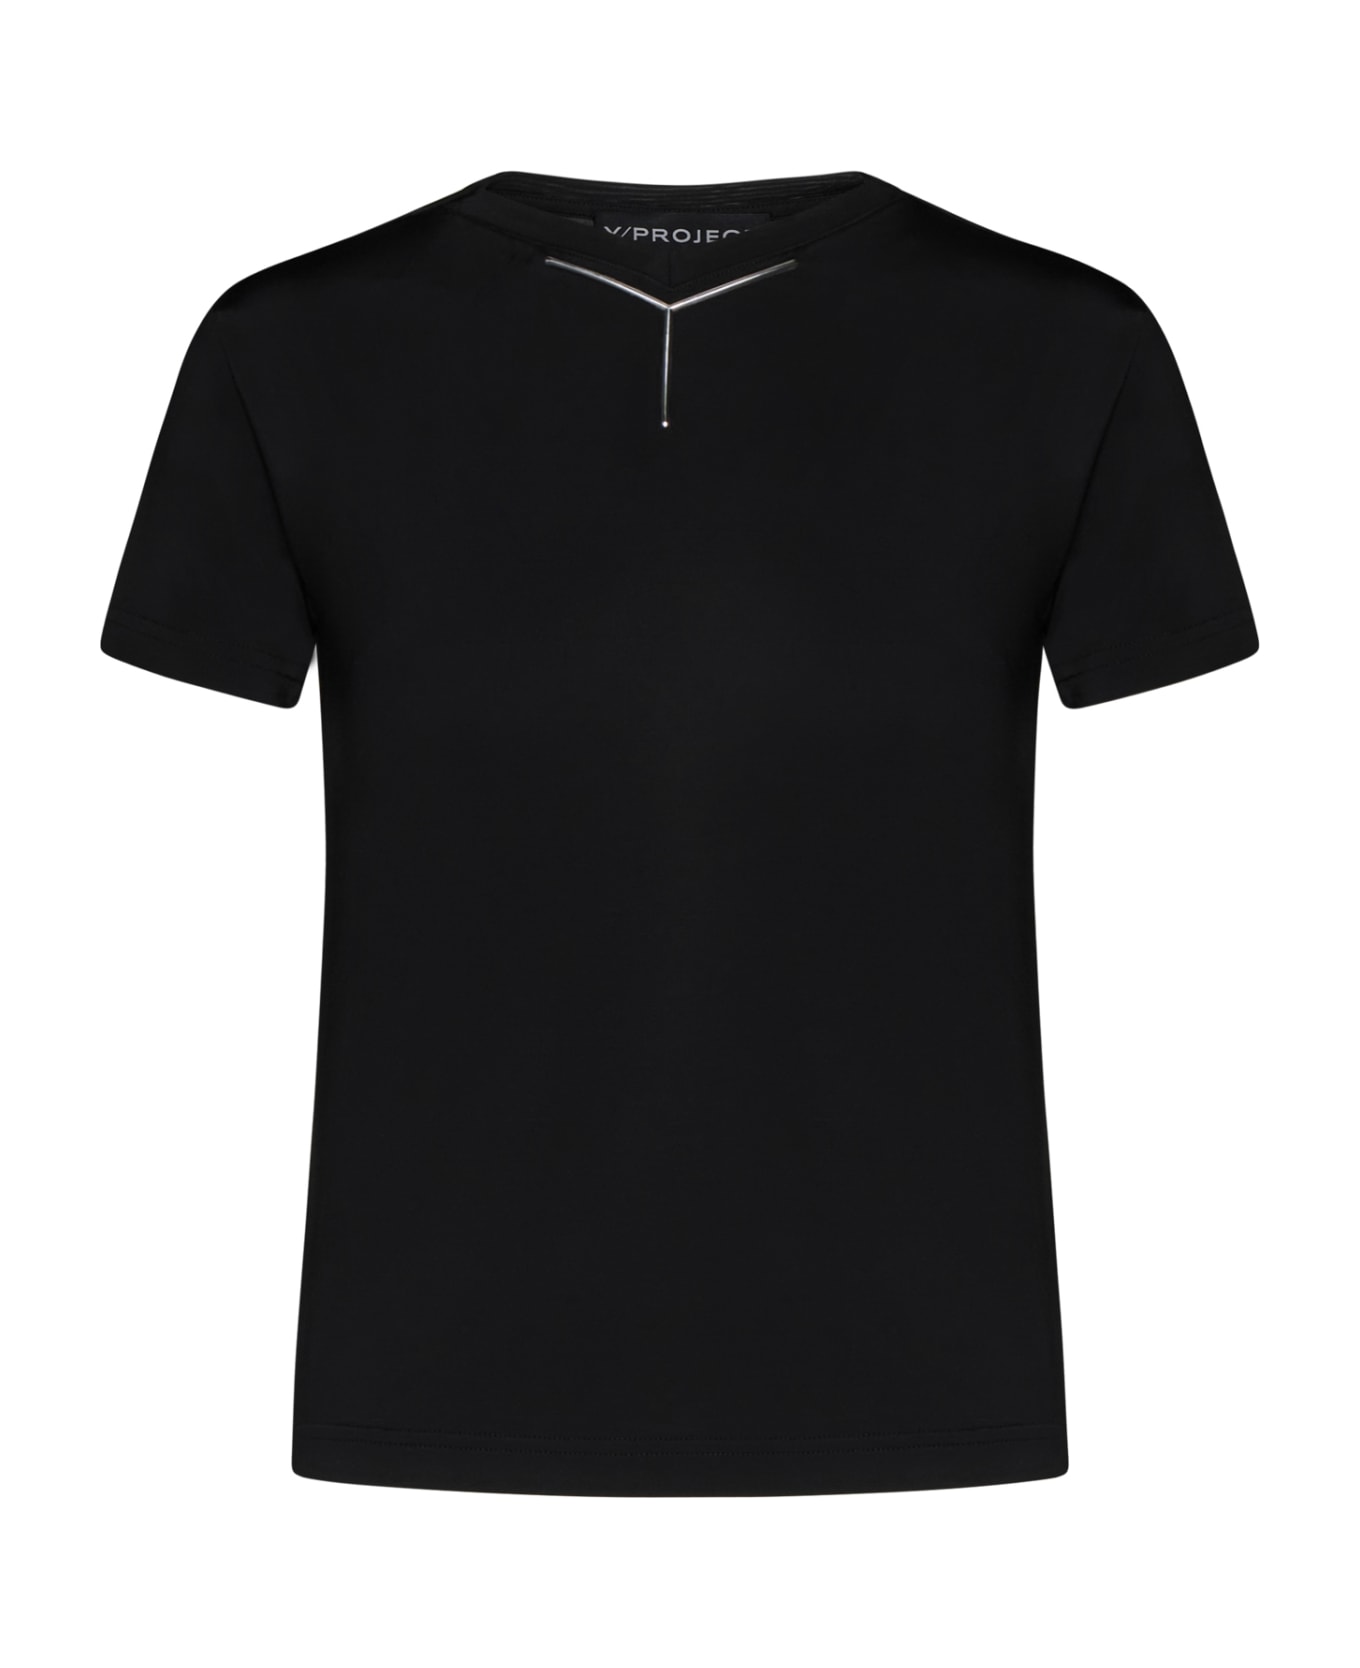 Y/Project T-Shirt - Black Tシャツ